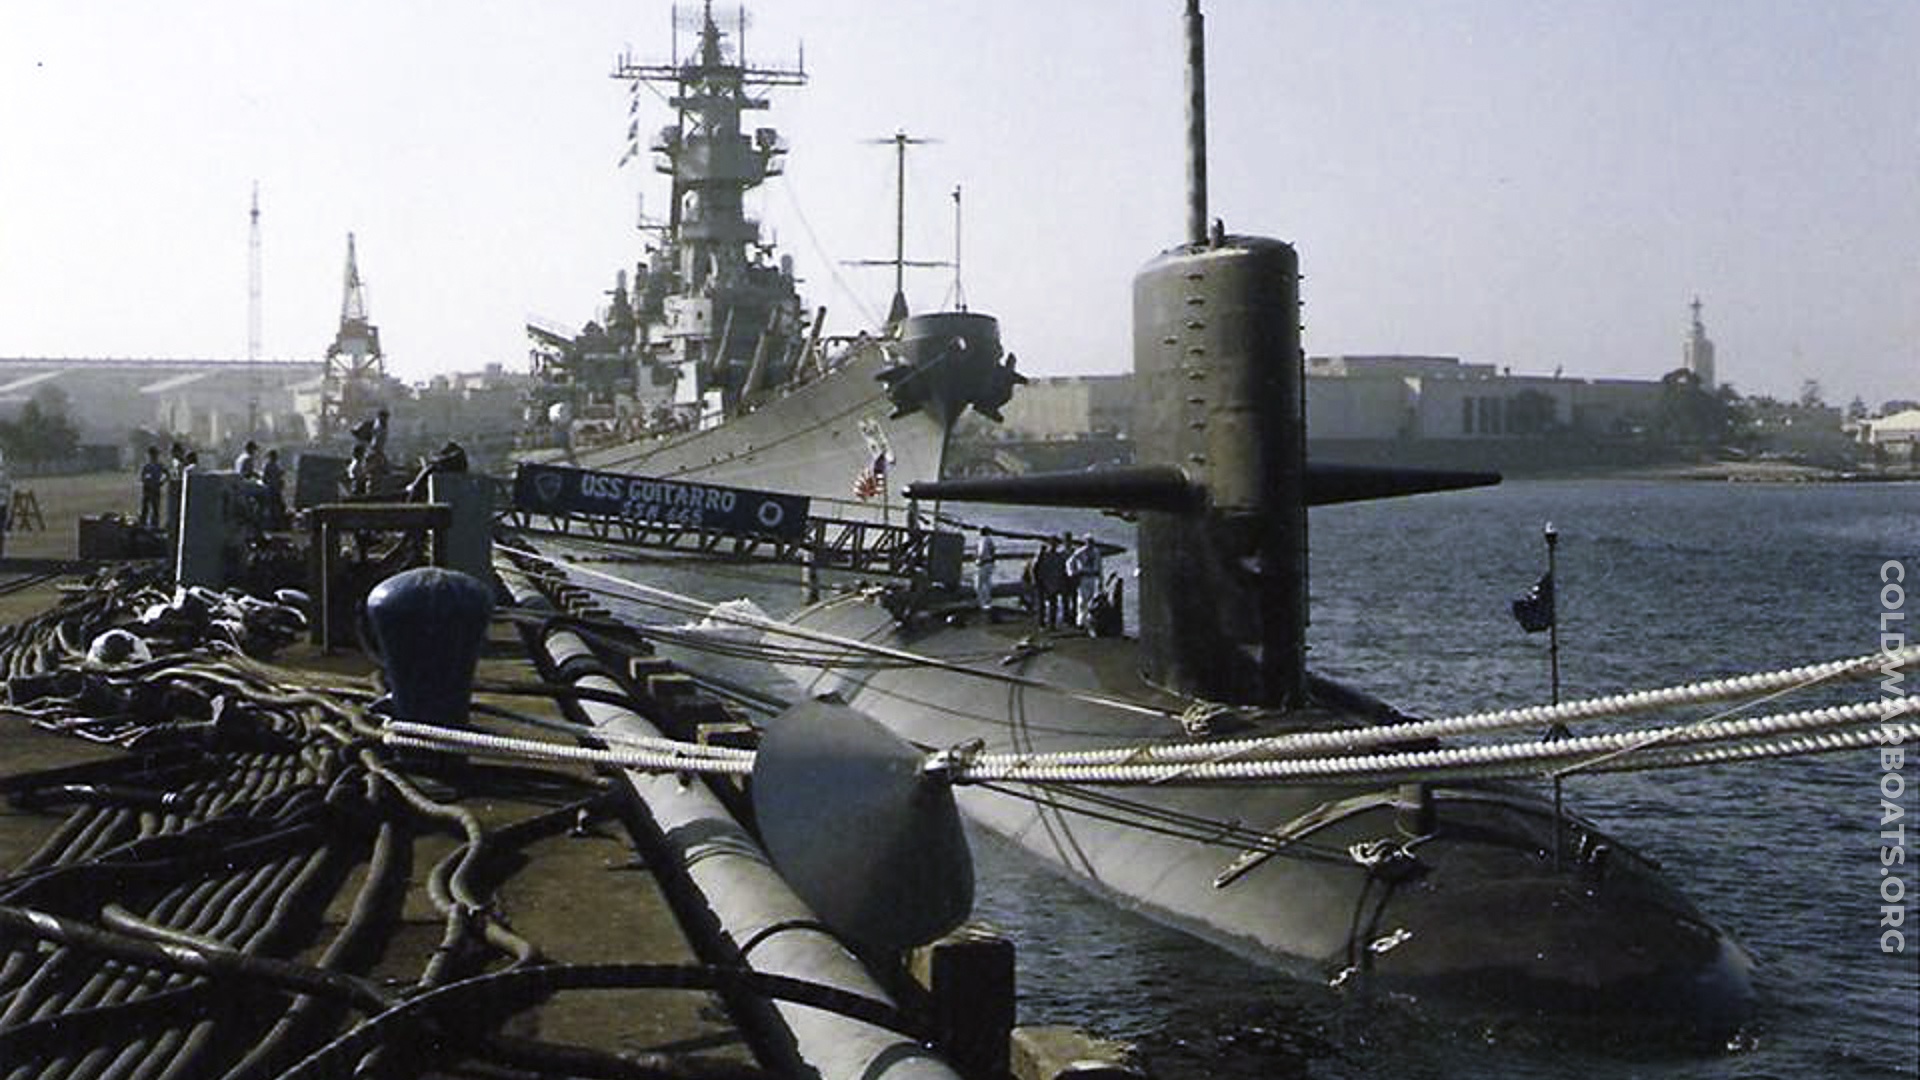 The USS GUITARRO (SSN 665) pierside at North Island, San Diego, CA, with the USS MISSOURI (BB 63).